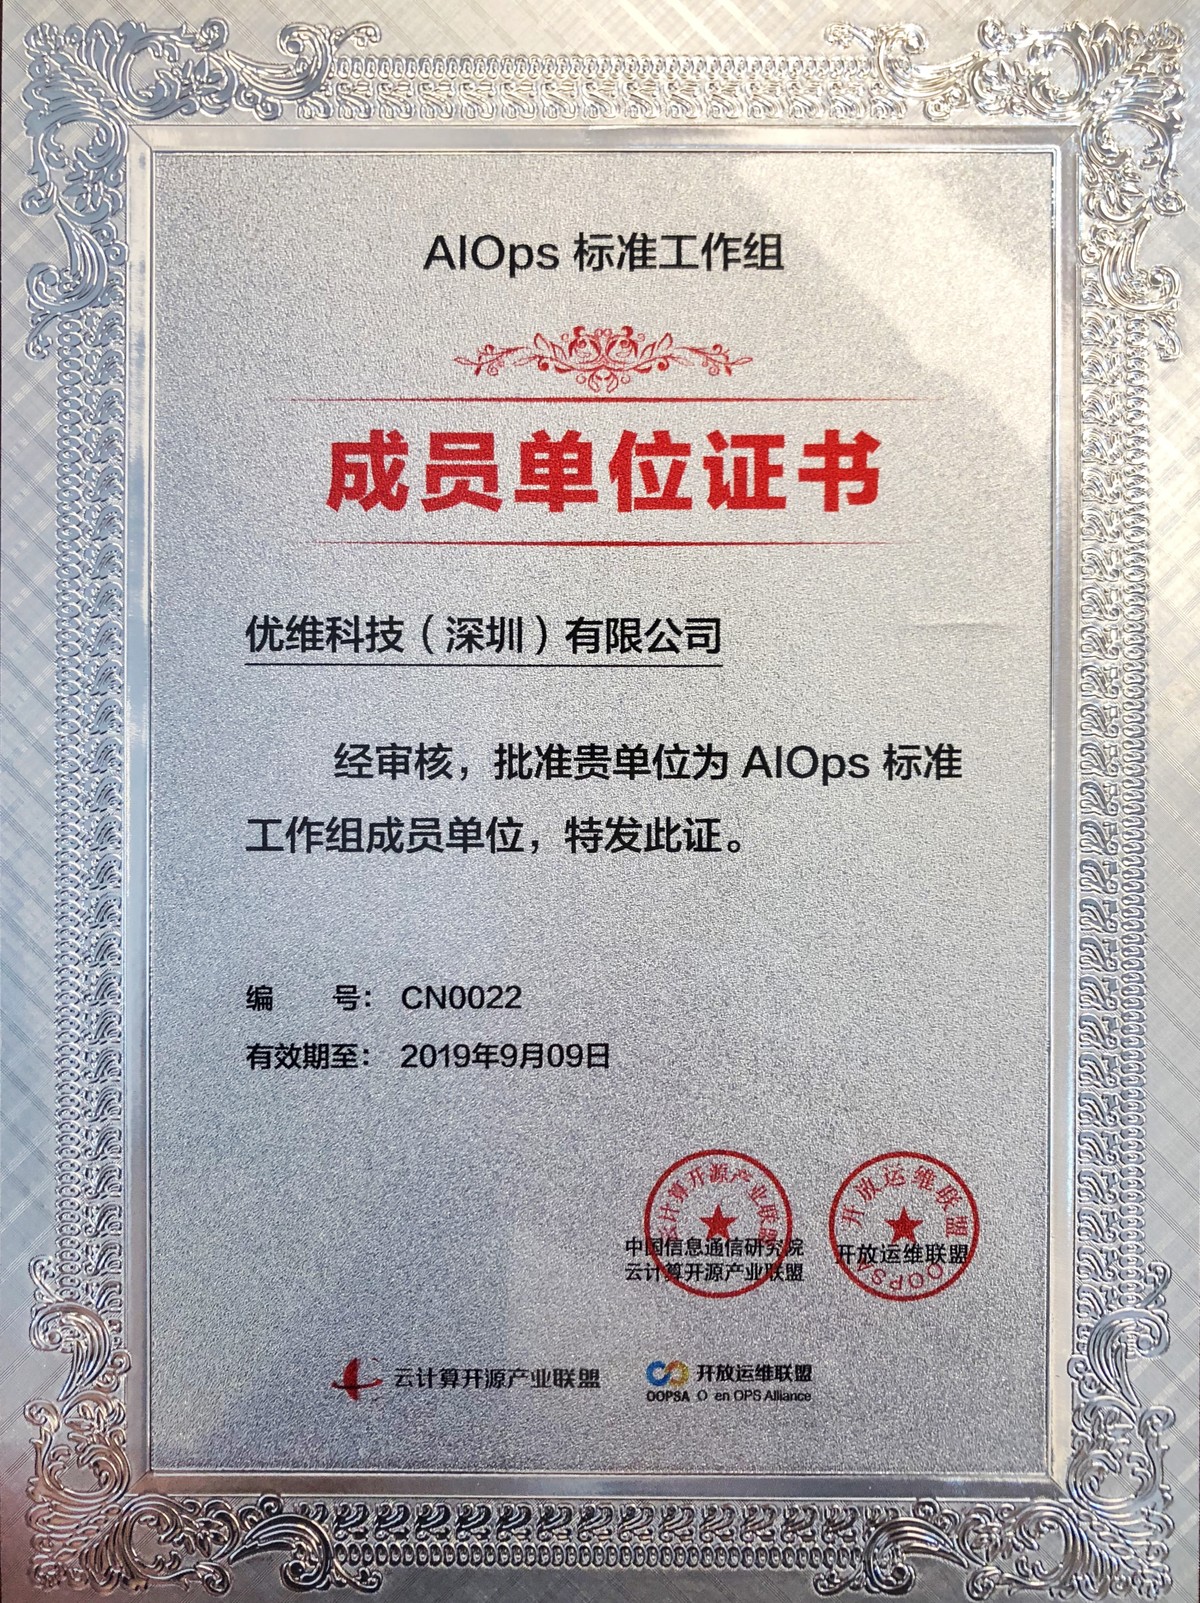 “AIOps标准工作组”证书